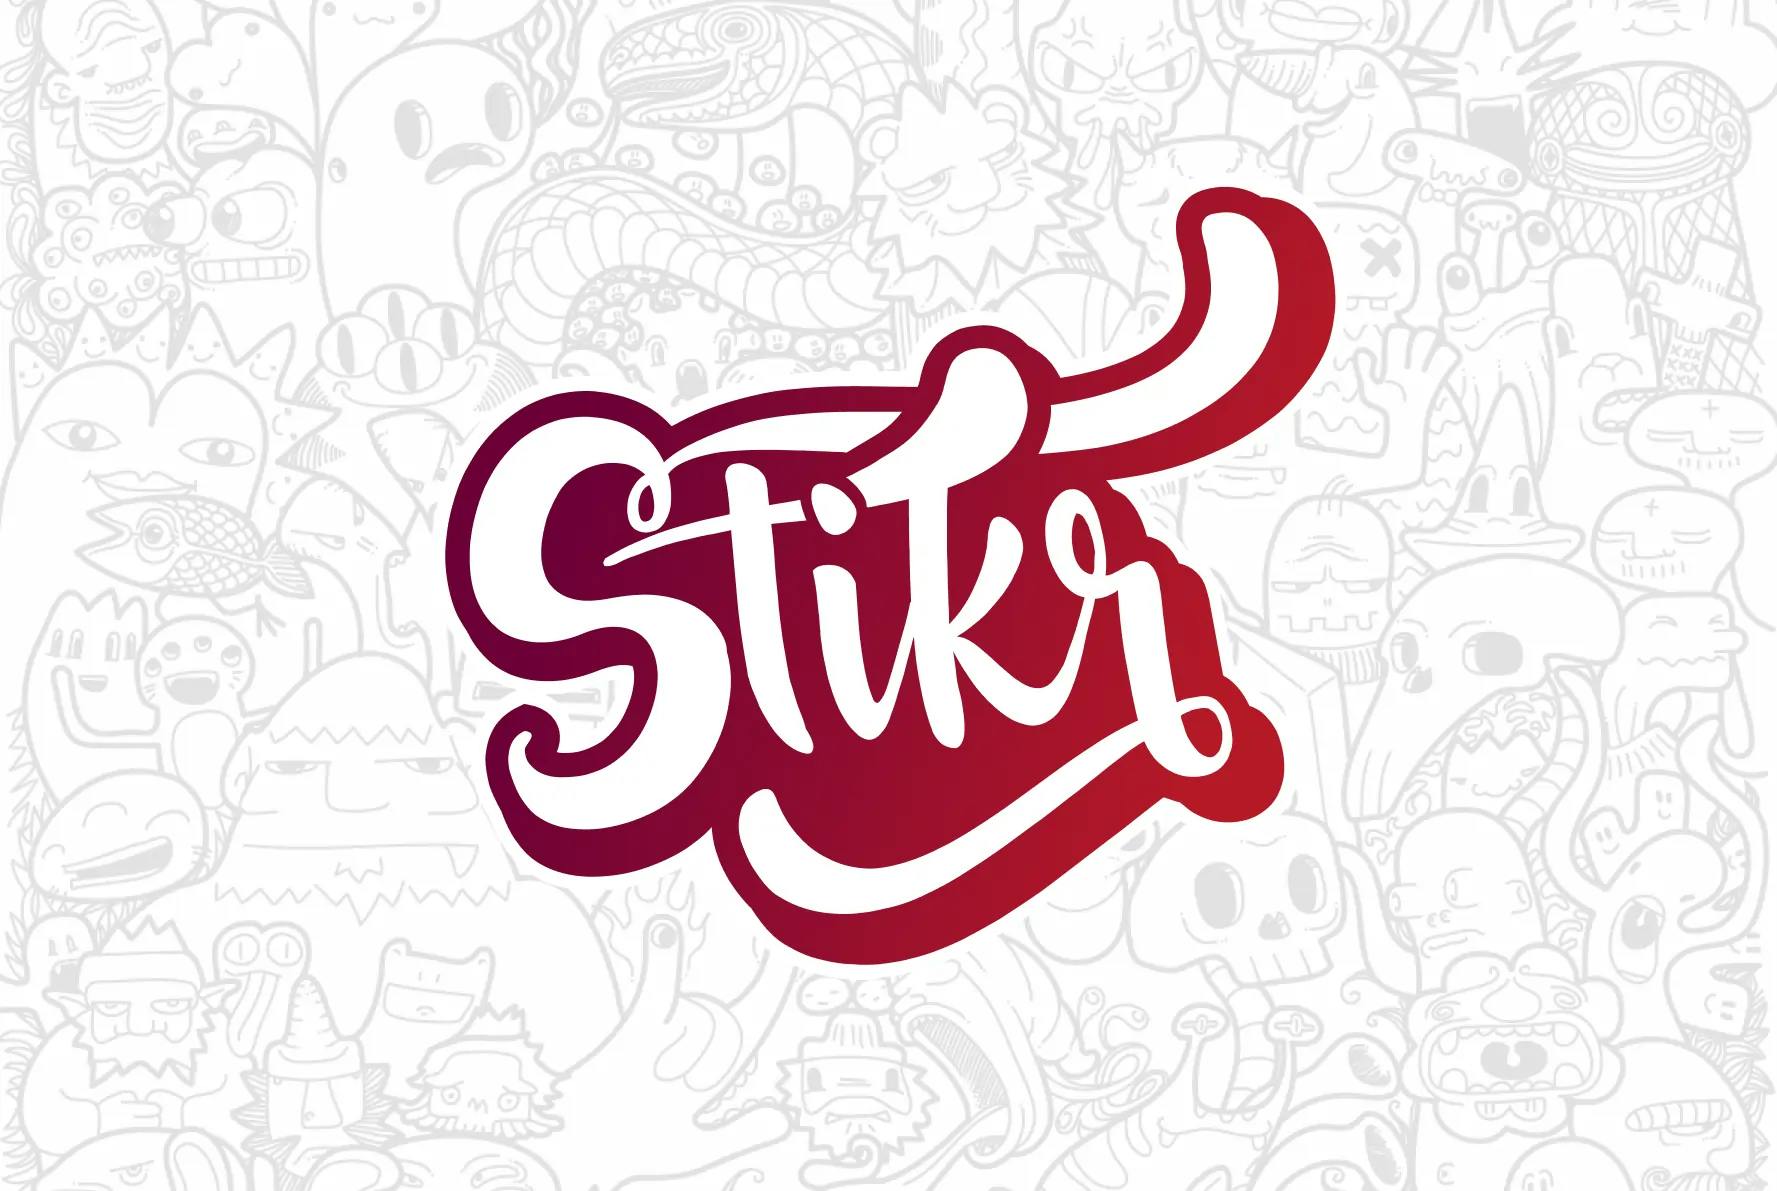 Stikr website